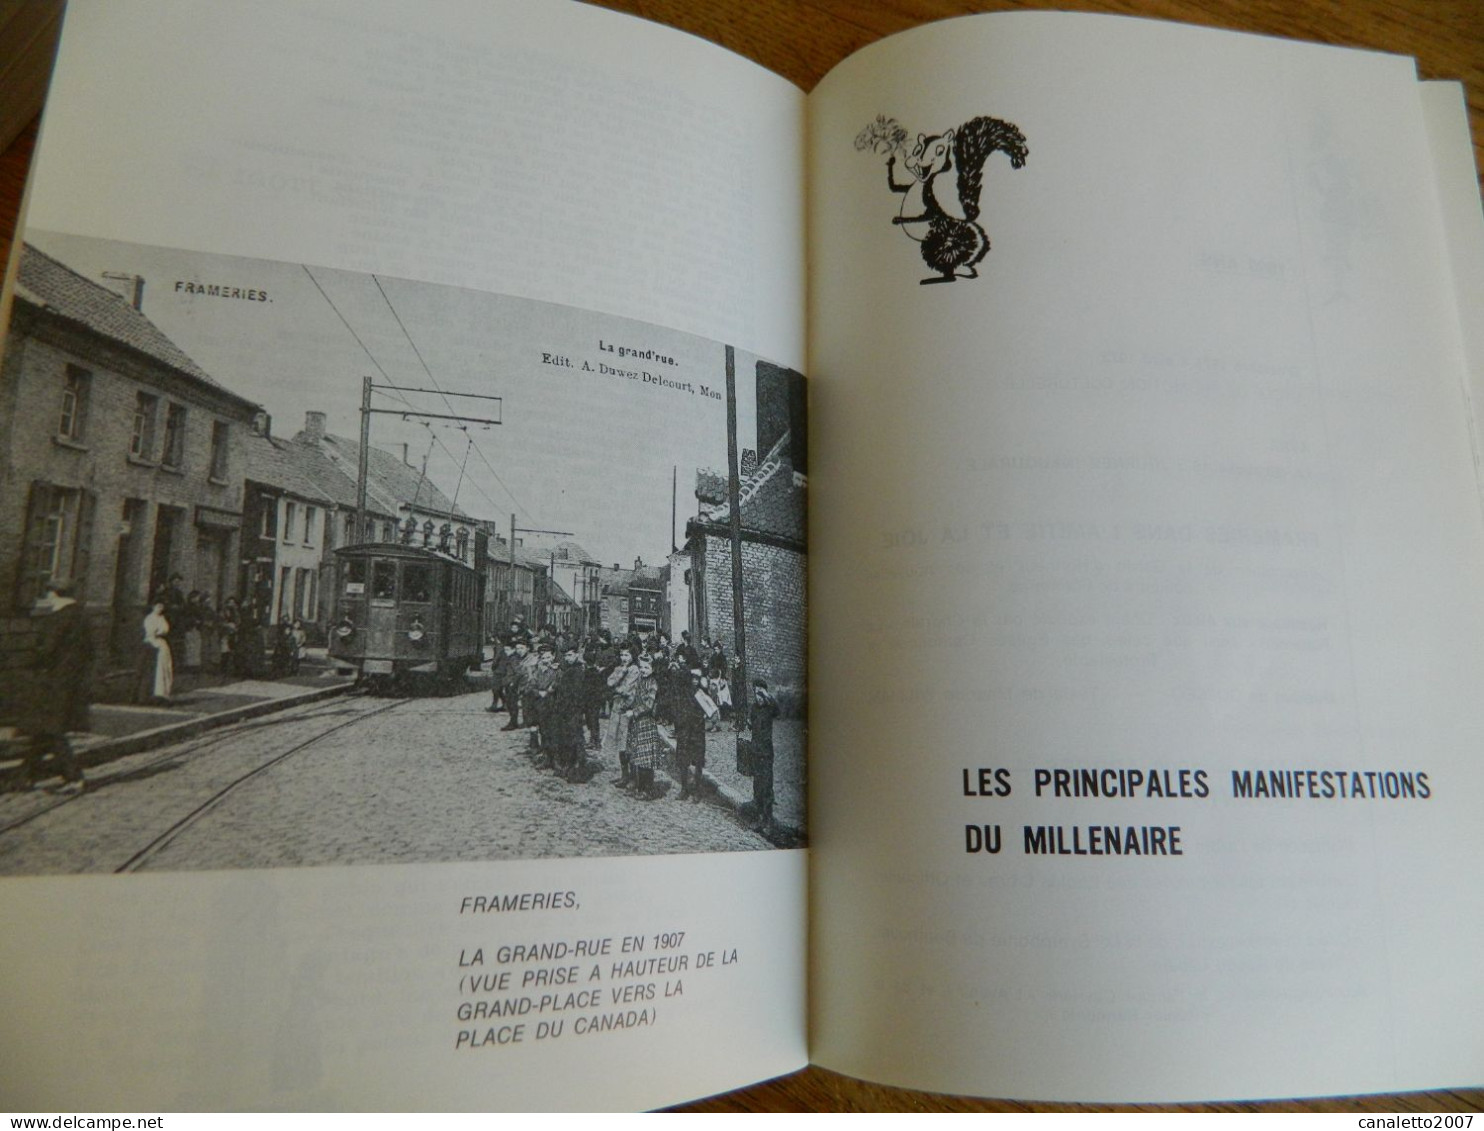 FRAMERIES: FRAMERIES MILLE  ANS -LIVRE  DE 1972  32 PAGES - Belgique